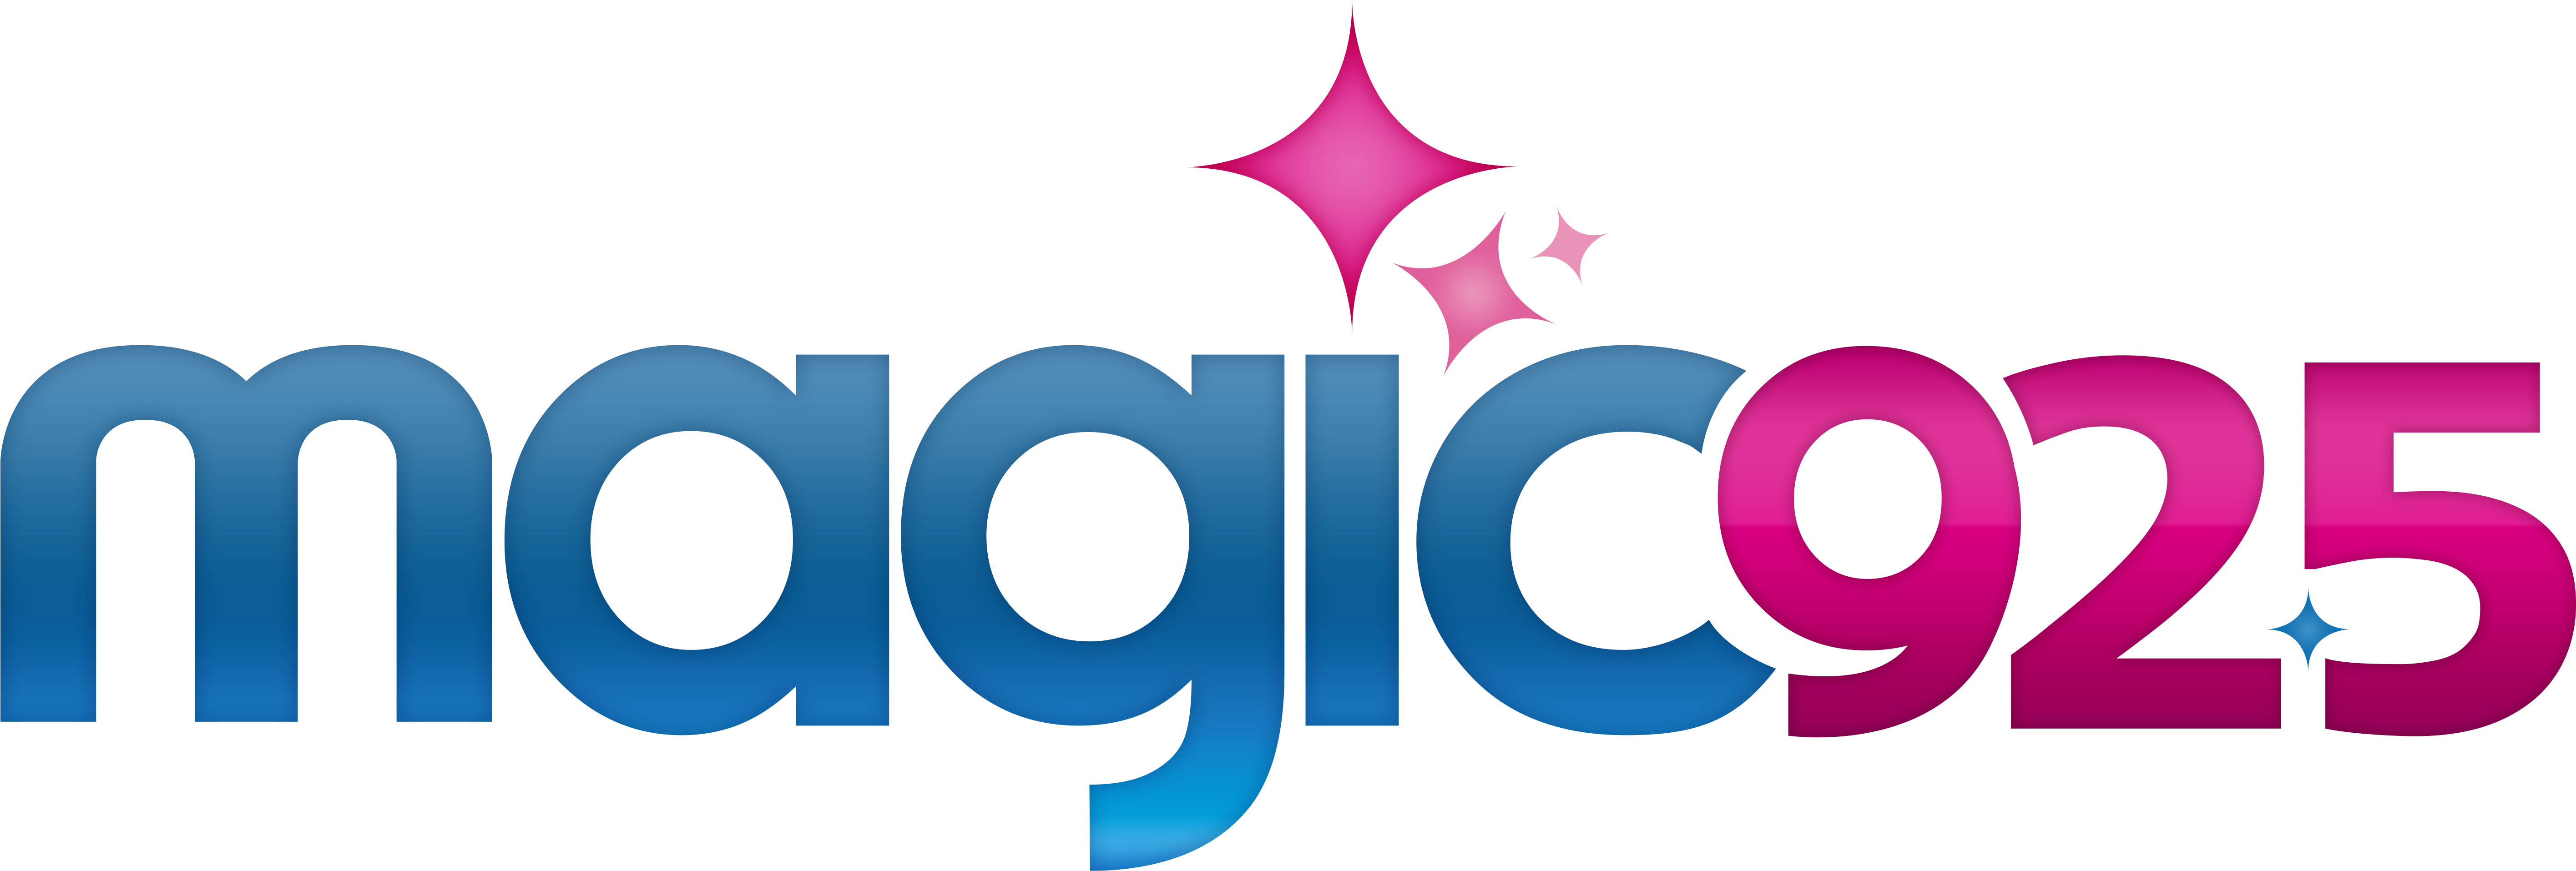 Magic 92 - - Magic 925 Logo (6000x1991)